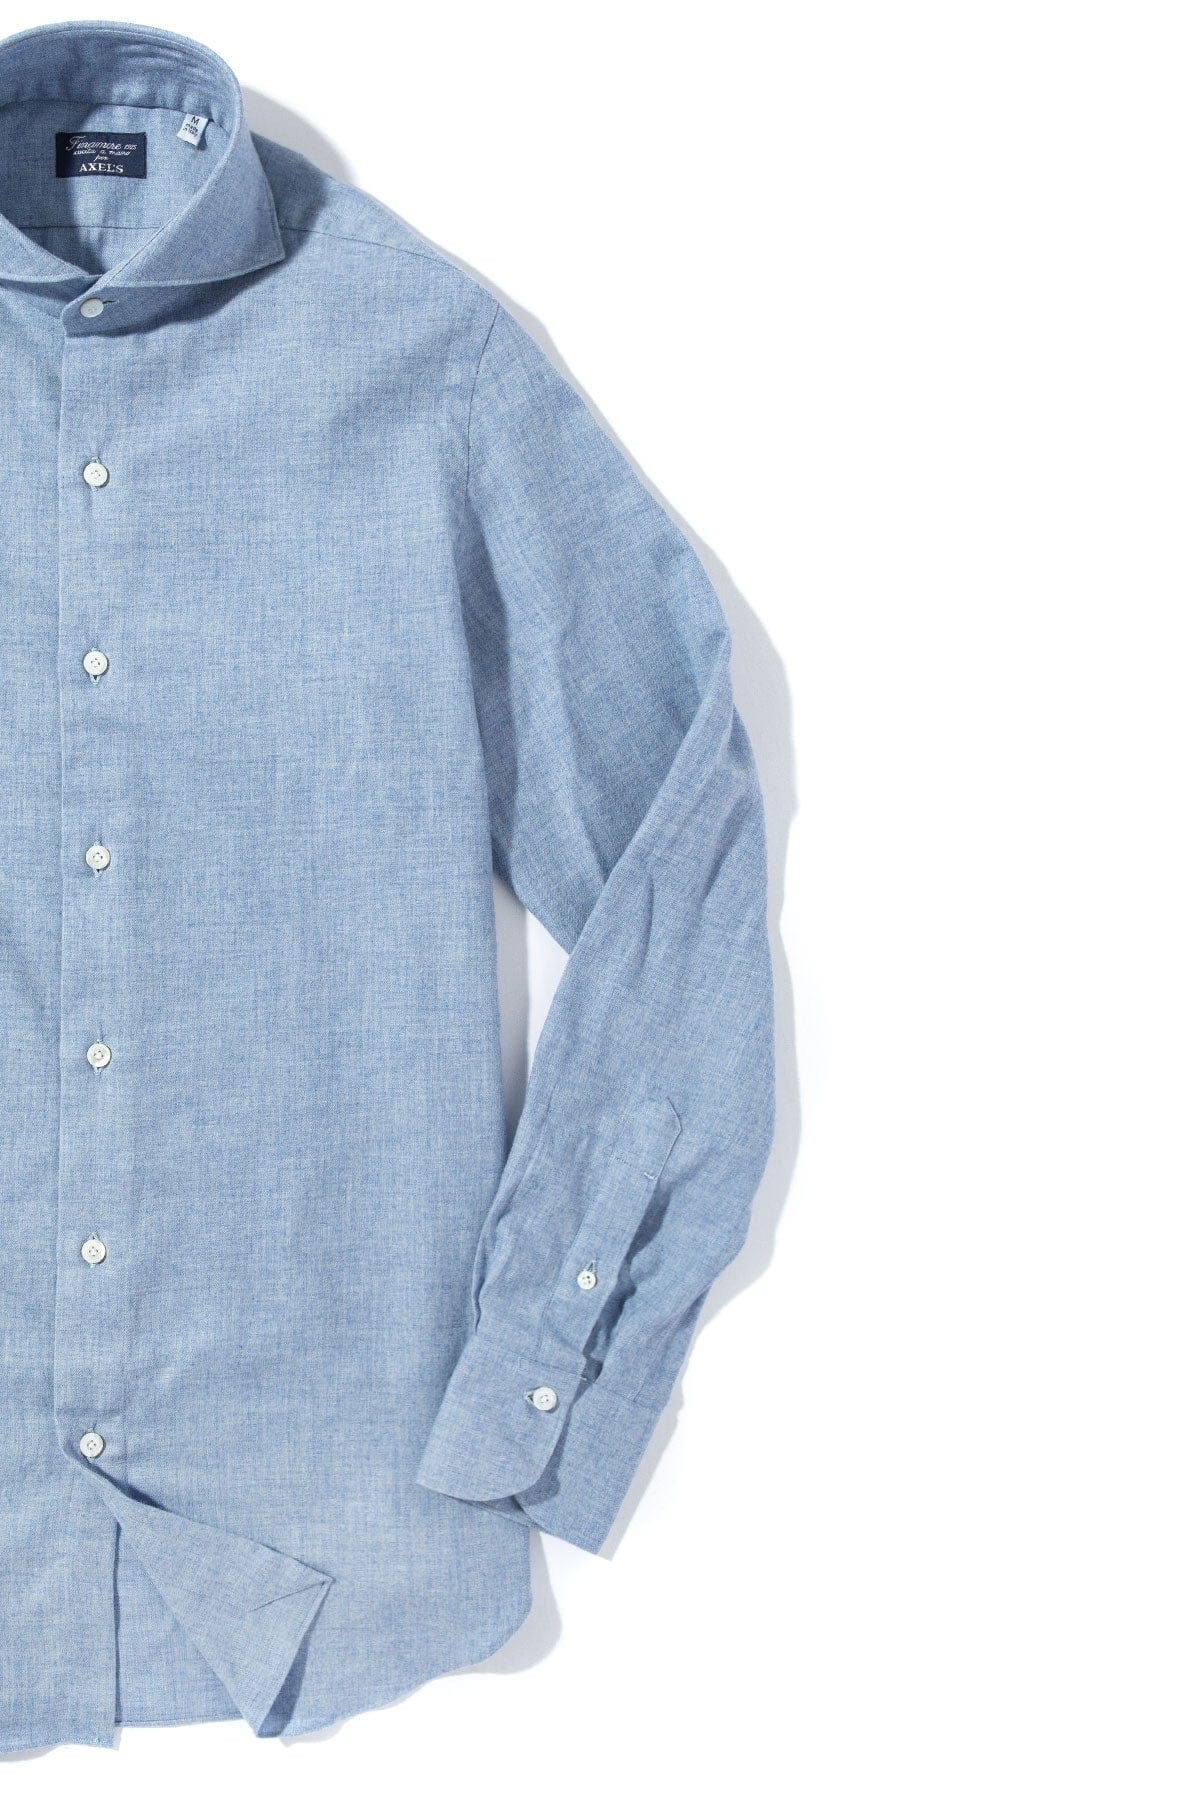 Hemme Cotton Cashmere Shirt in Lt. Blue - AXEL'S